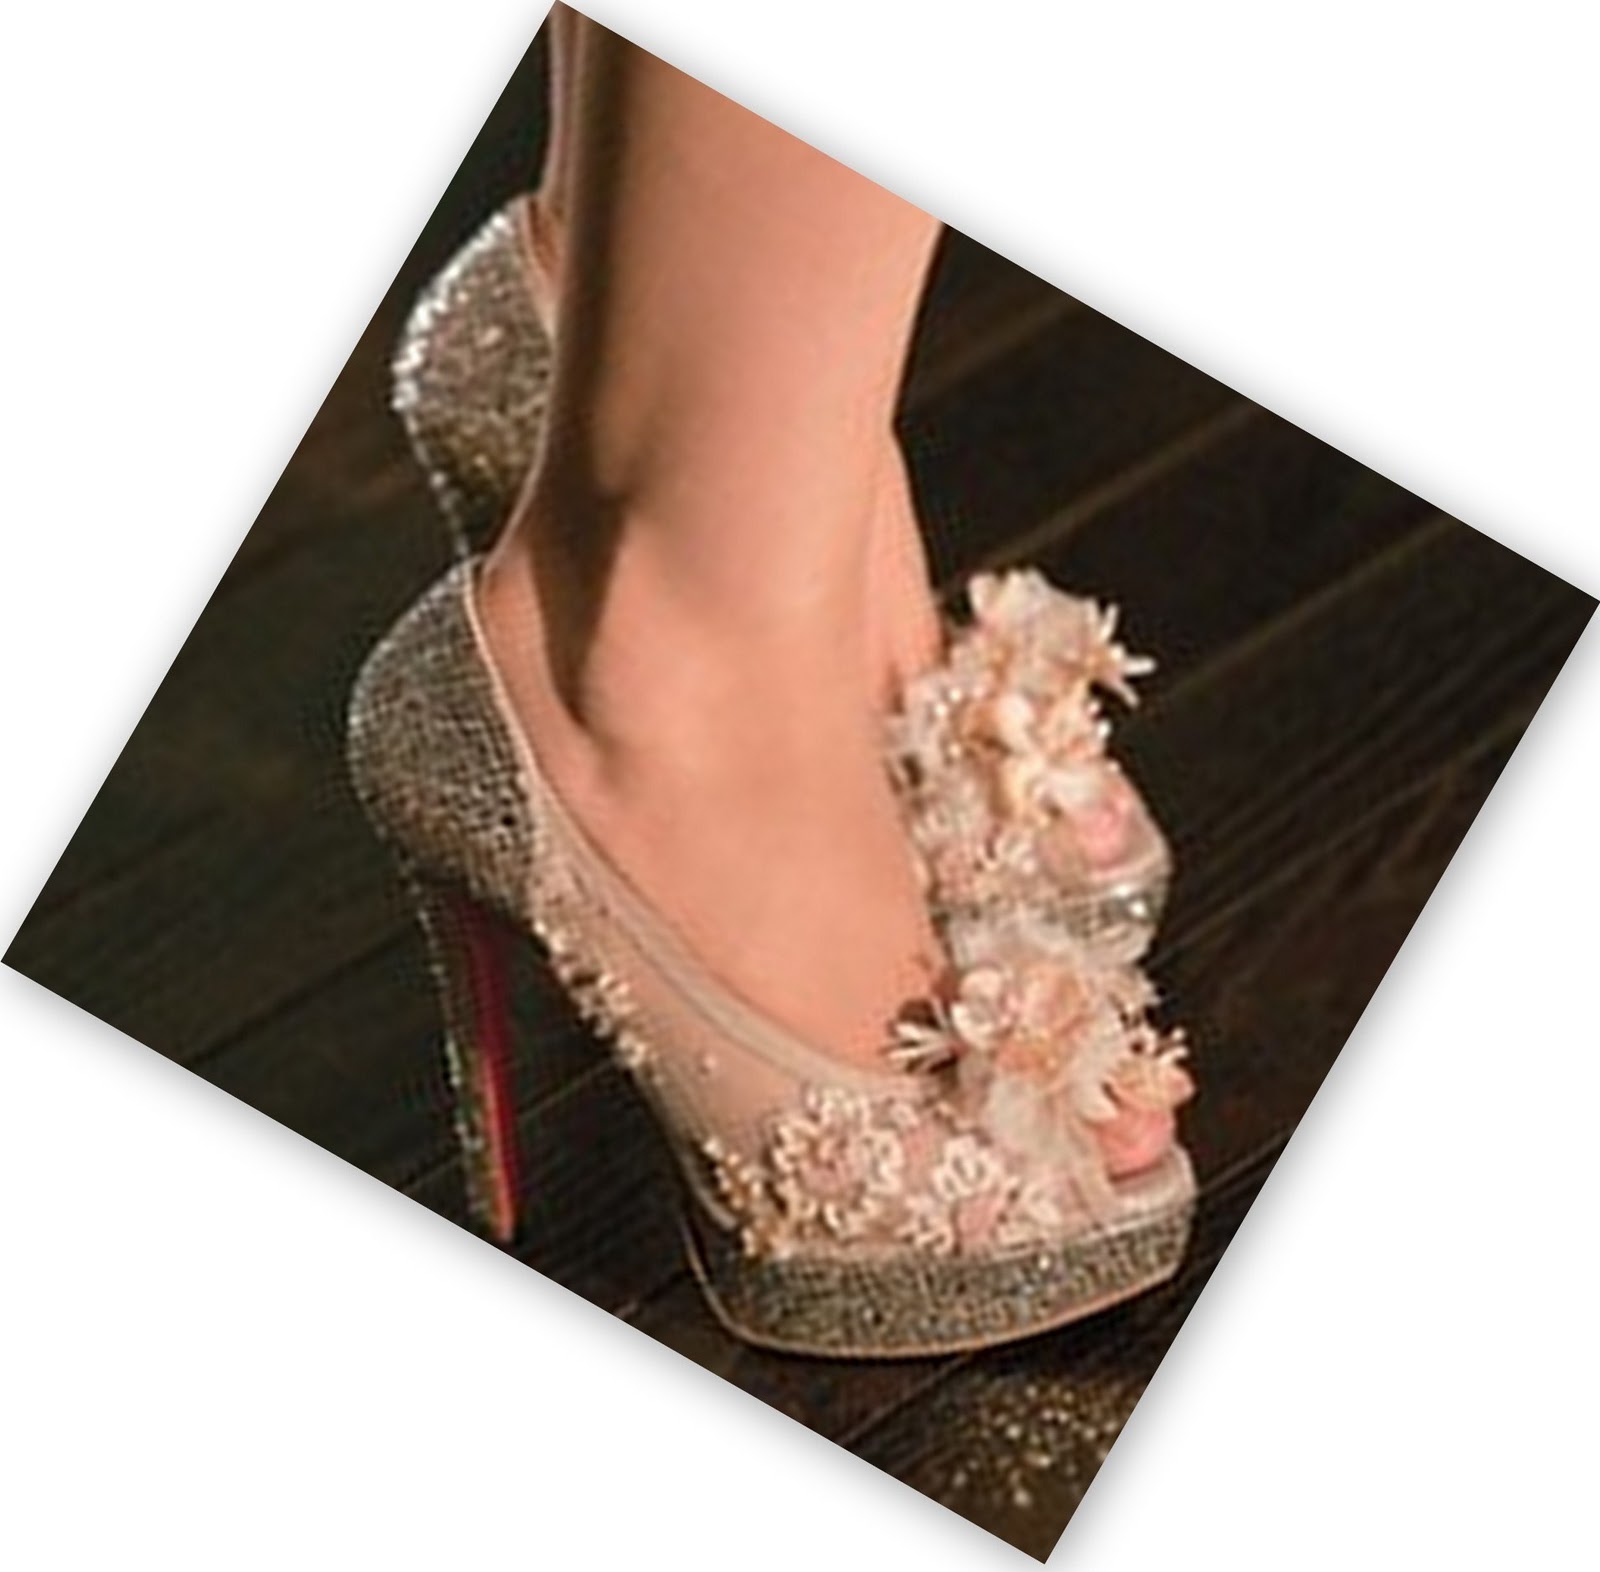 louboutin shoes burlesque